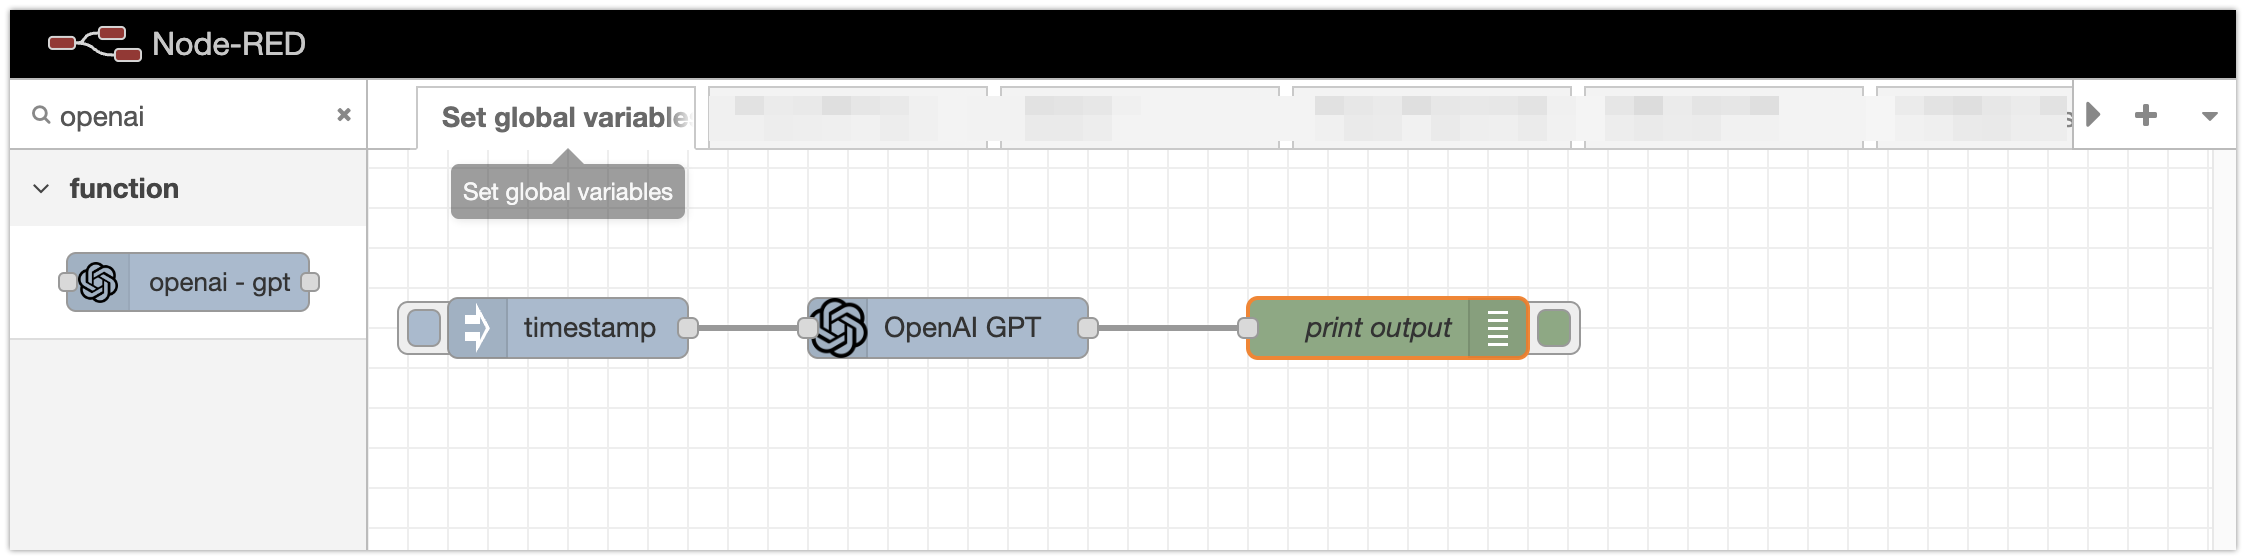 OpenAI Node-RED node - Flow example